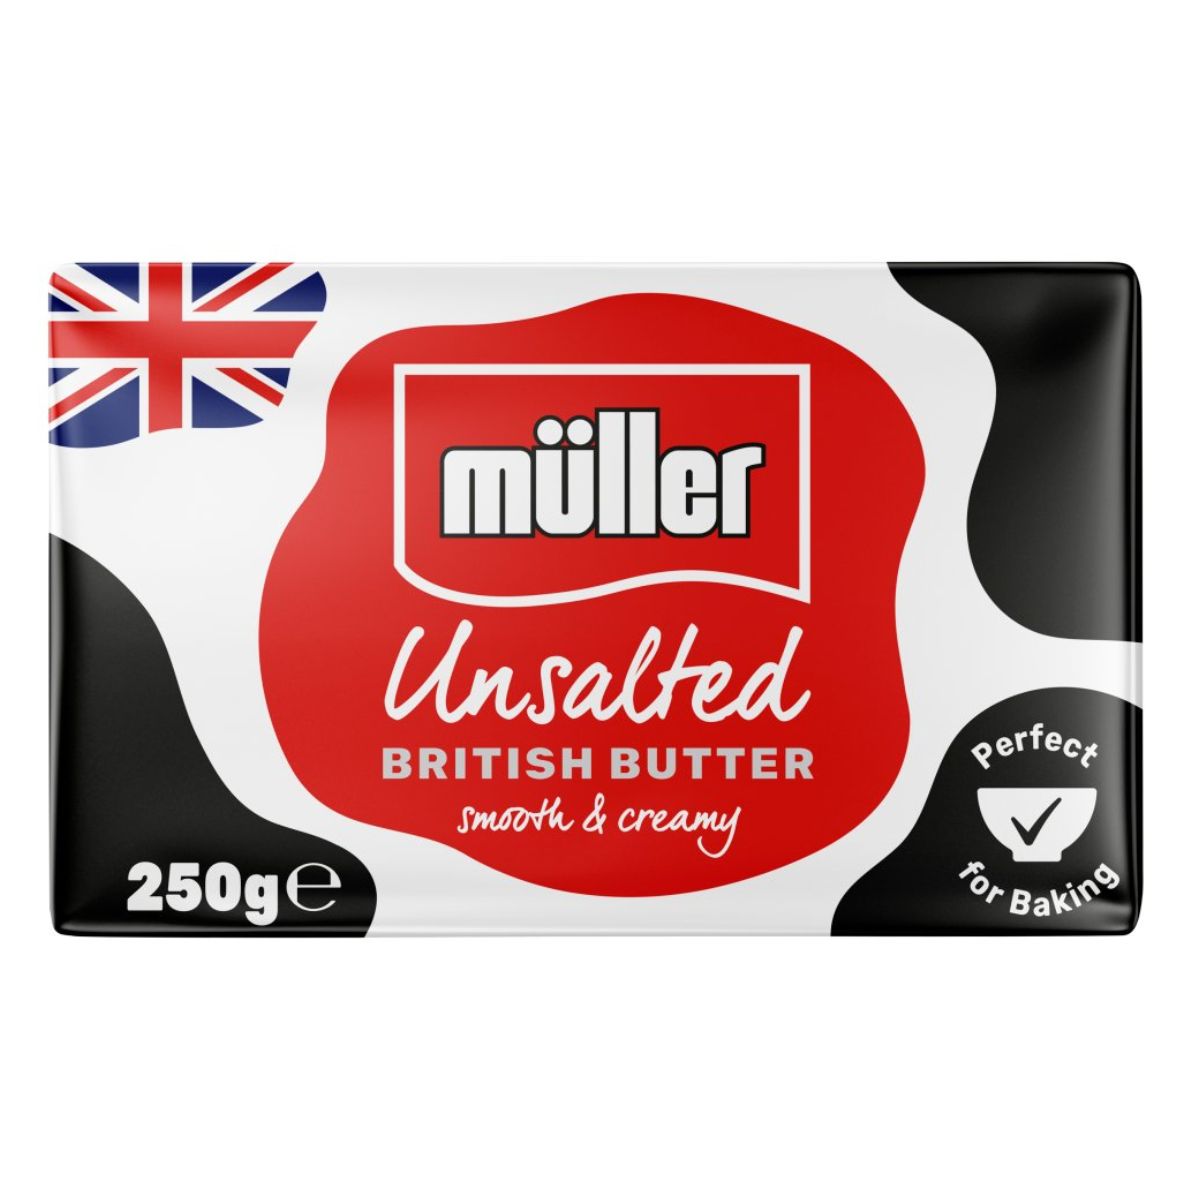 Muller - Unsalted British Butter - 250g.